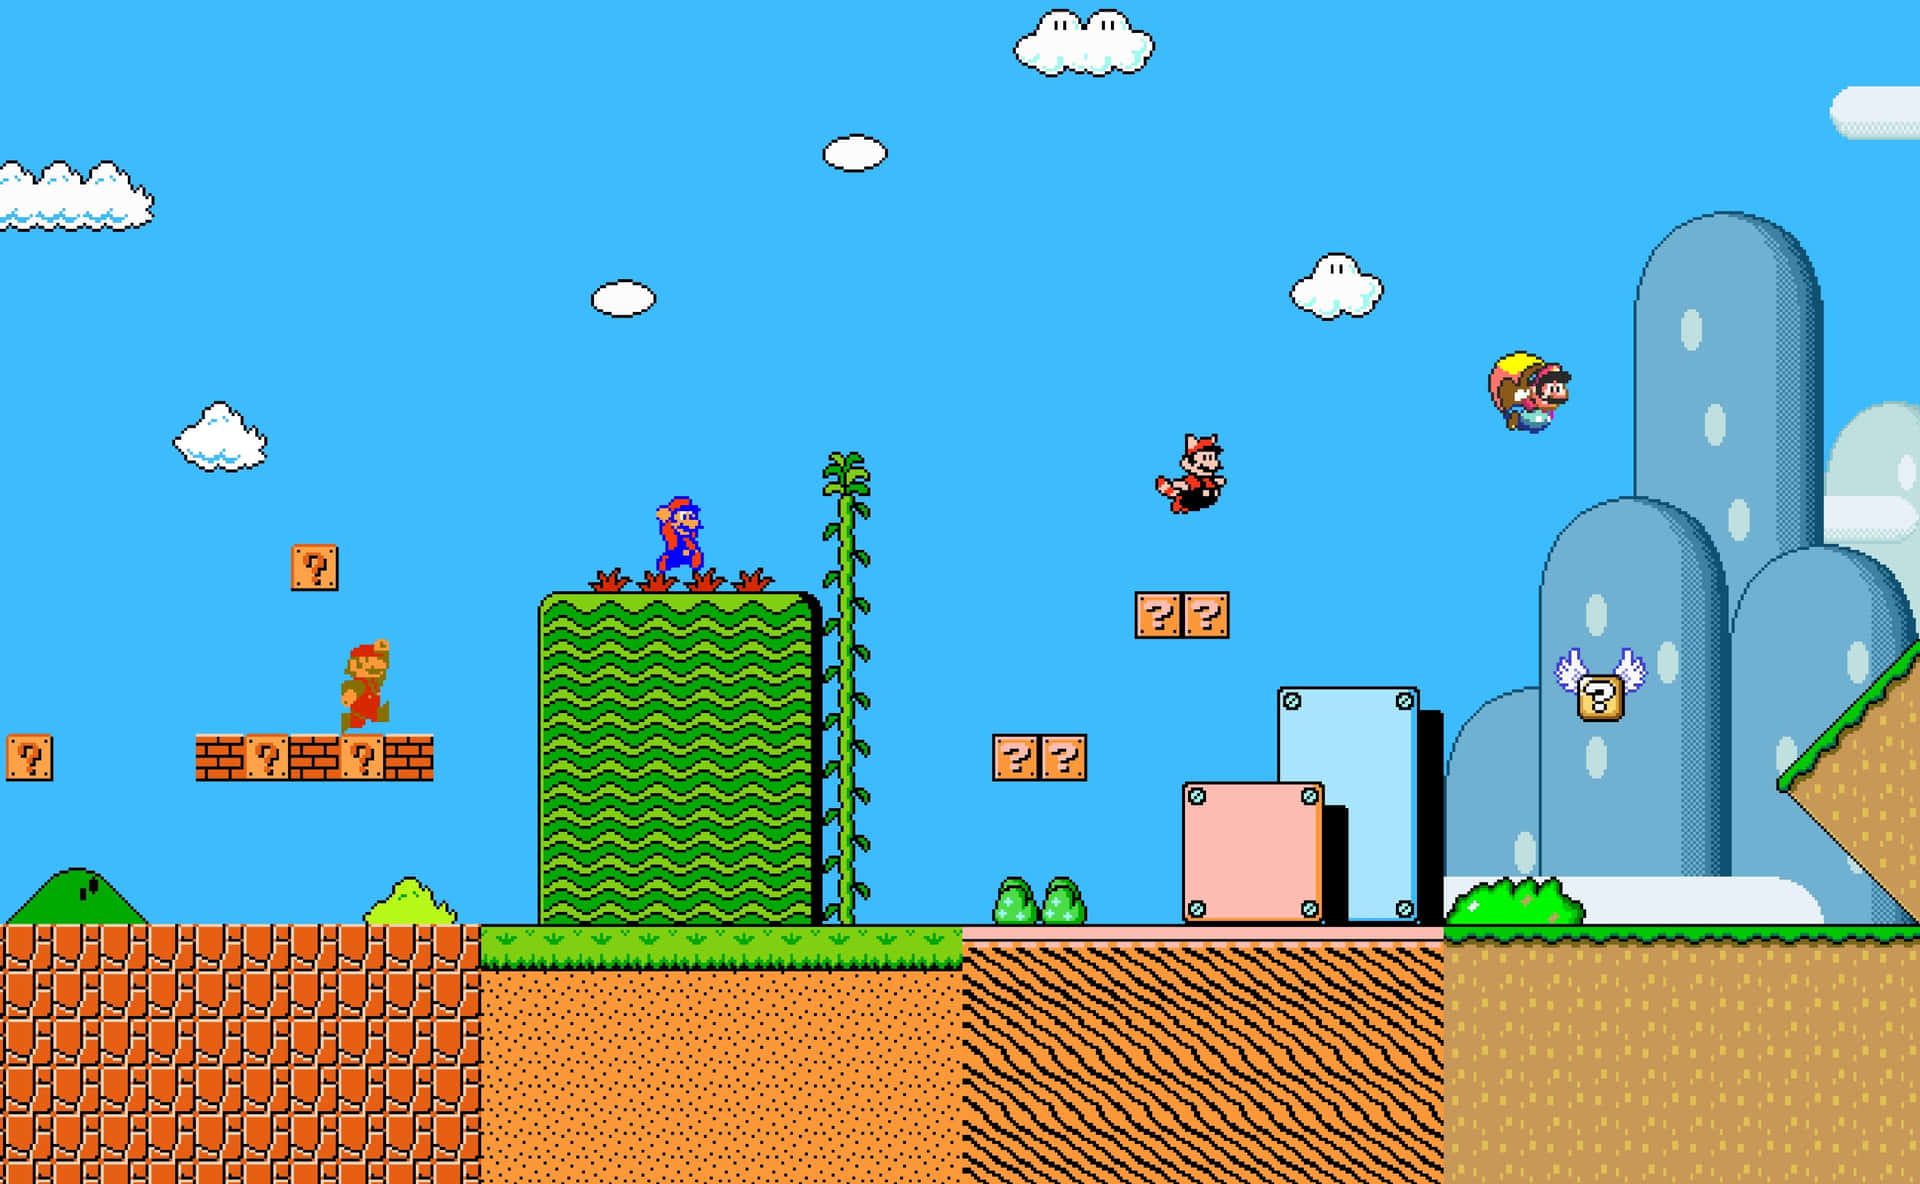 Enjoy Classic Video Game Fun with Super Mario